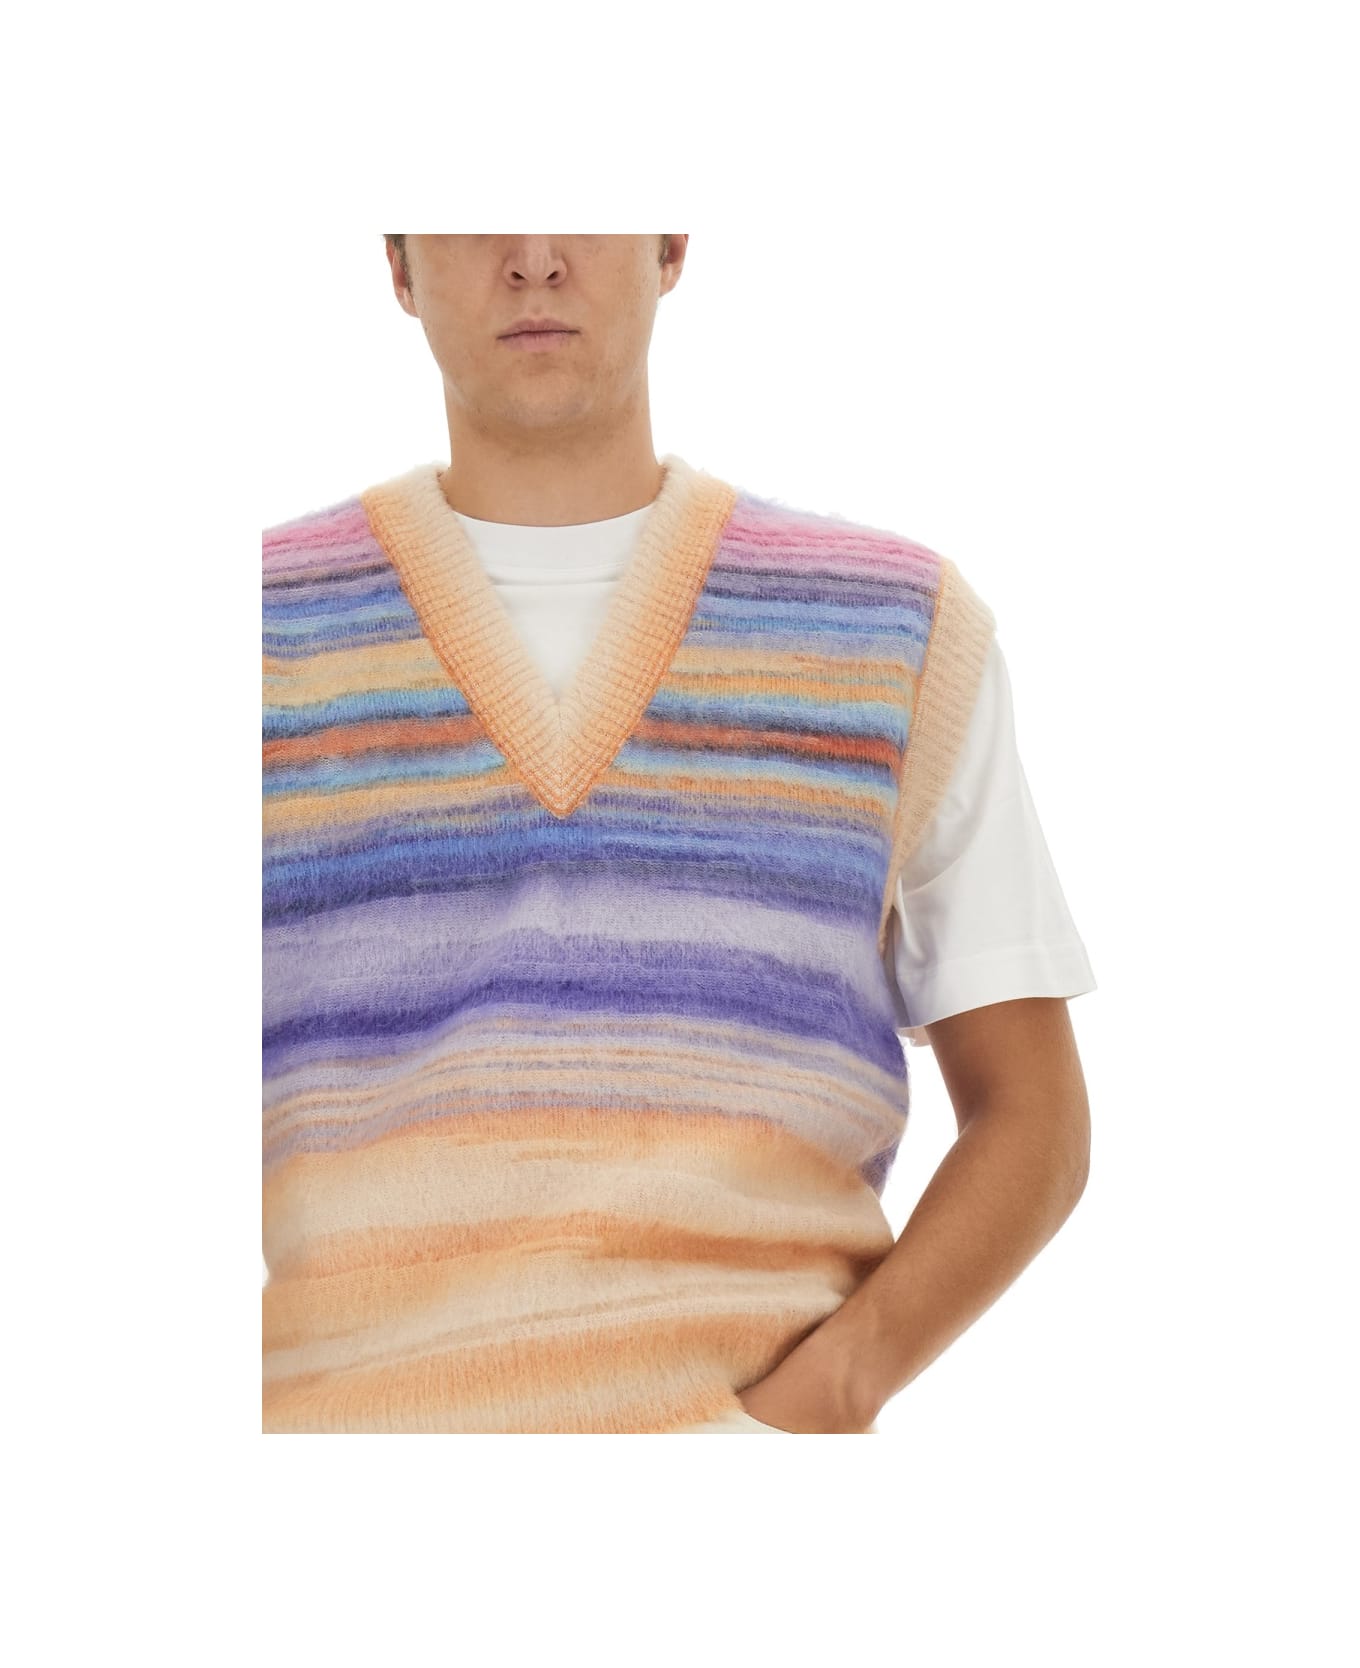 Missoni Knitted Vest - Orang/lila/blu/pink